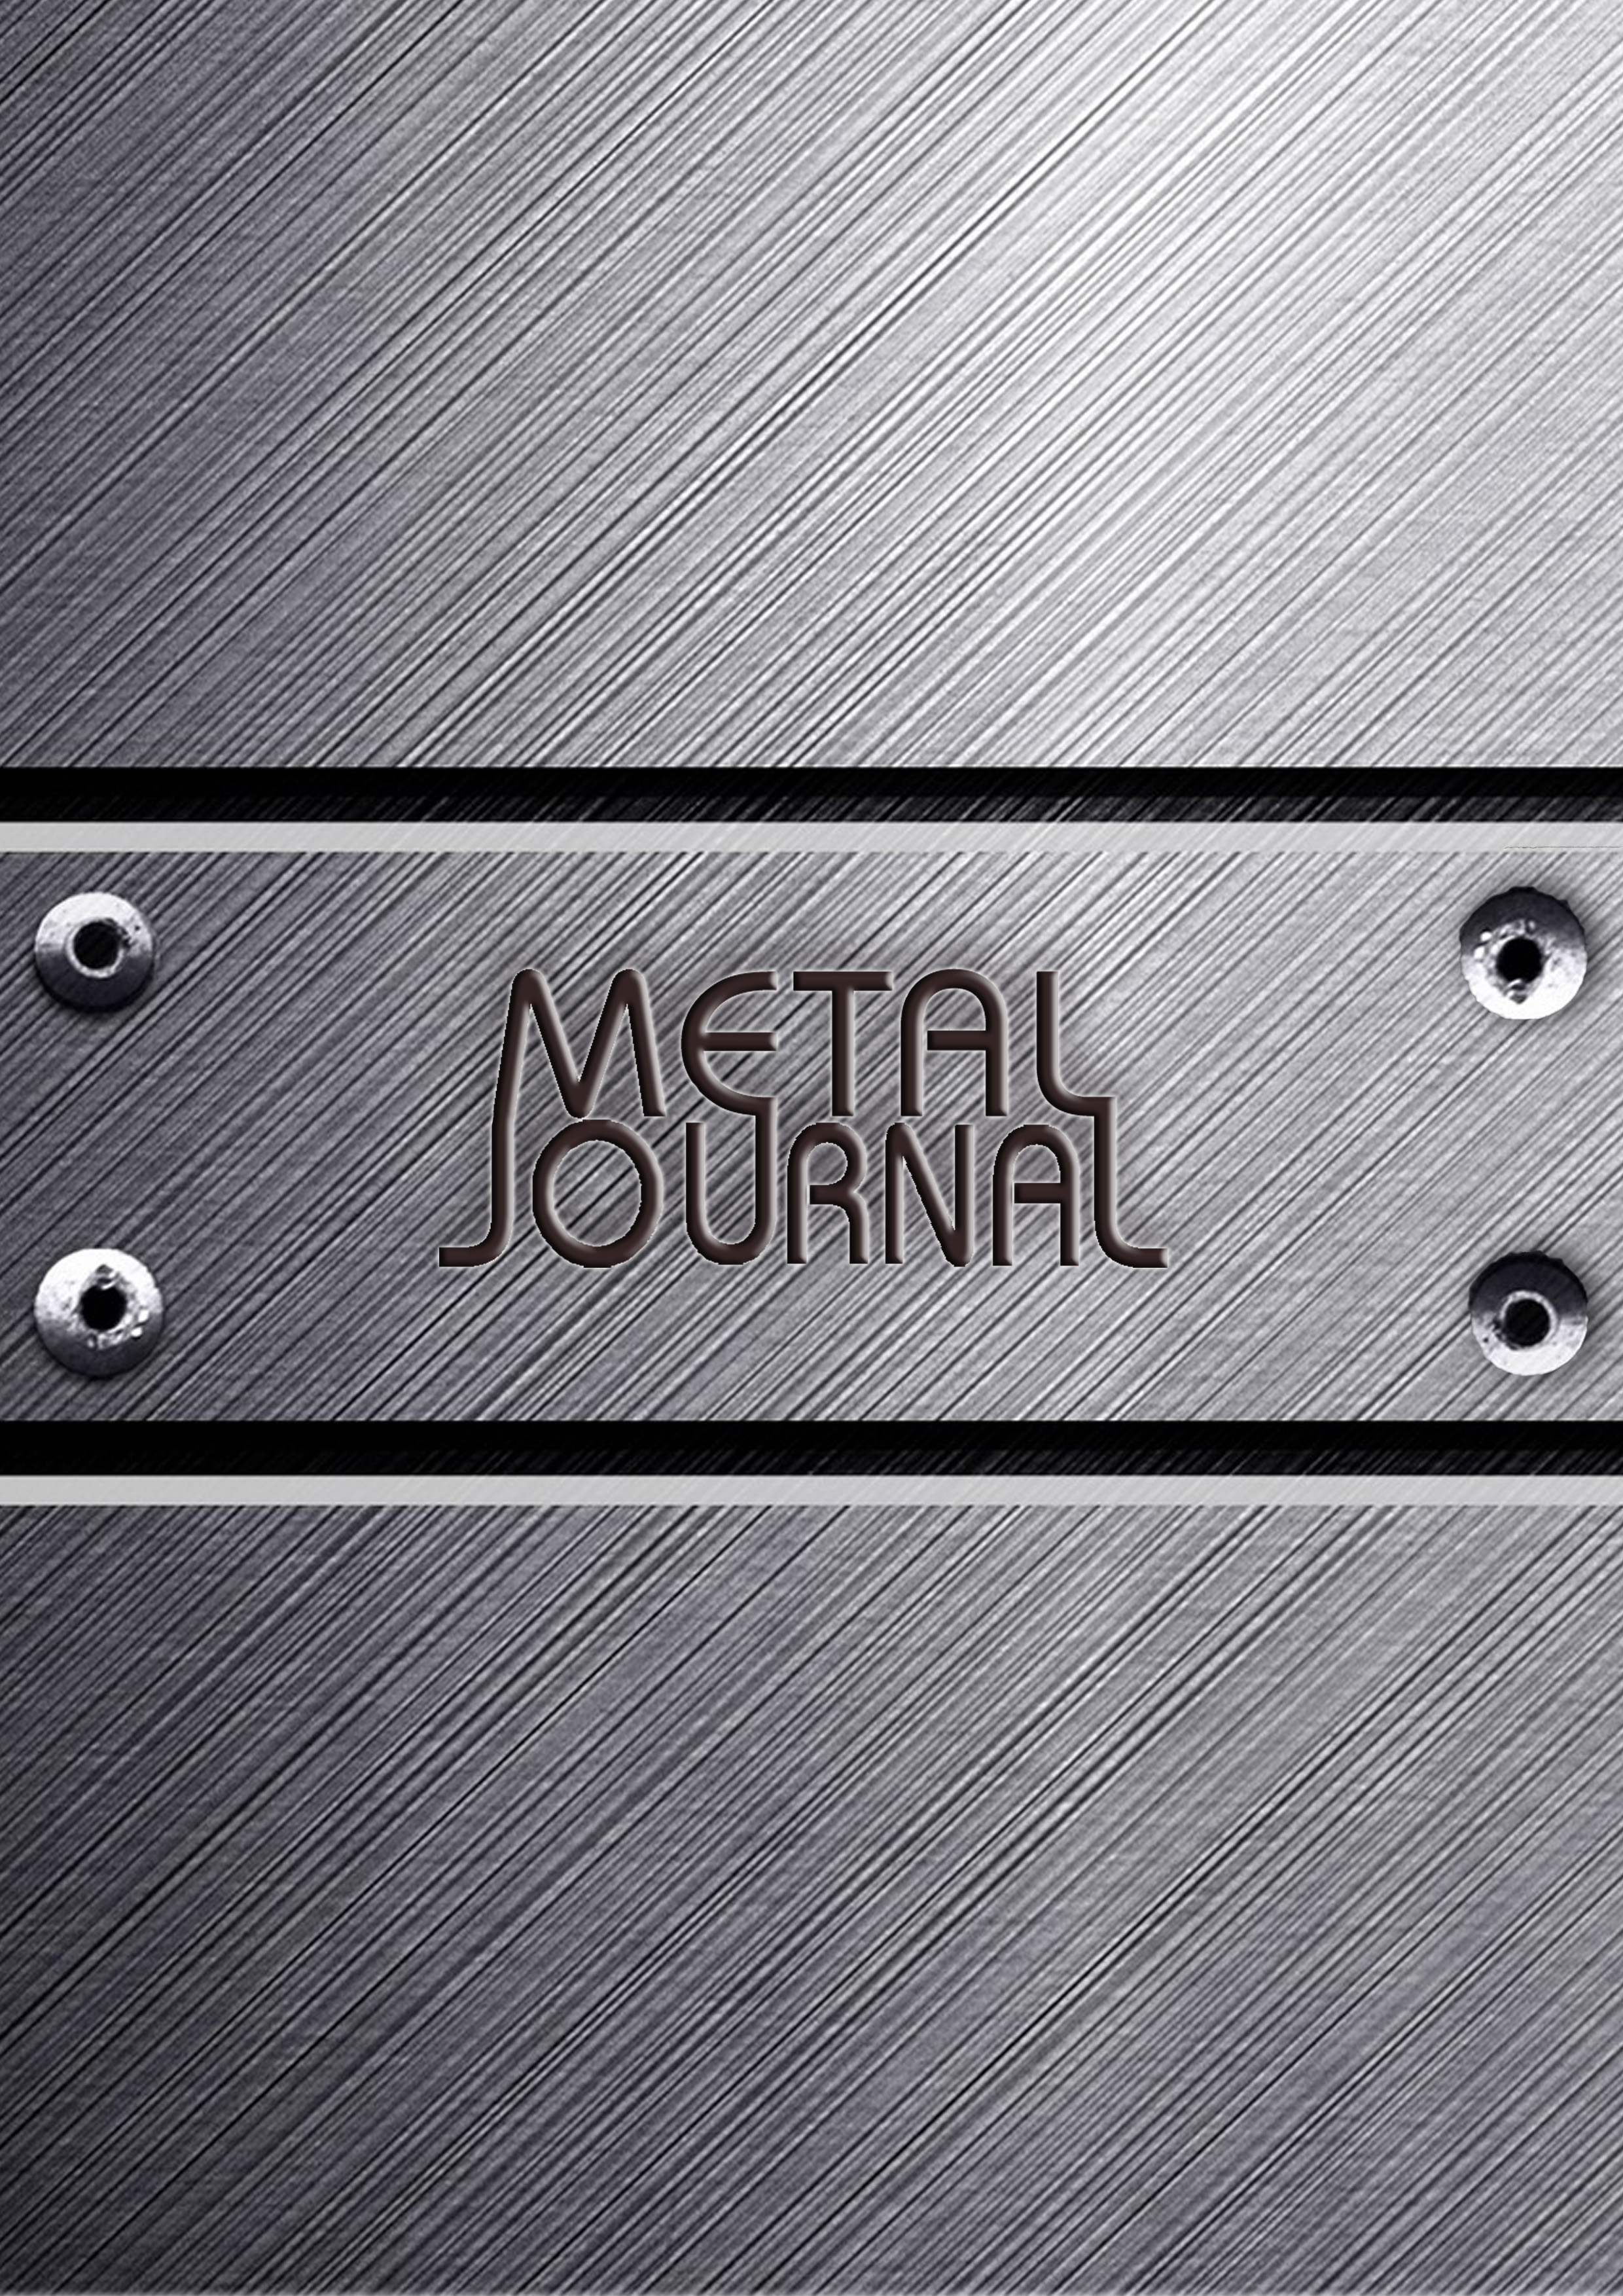 Metal journal